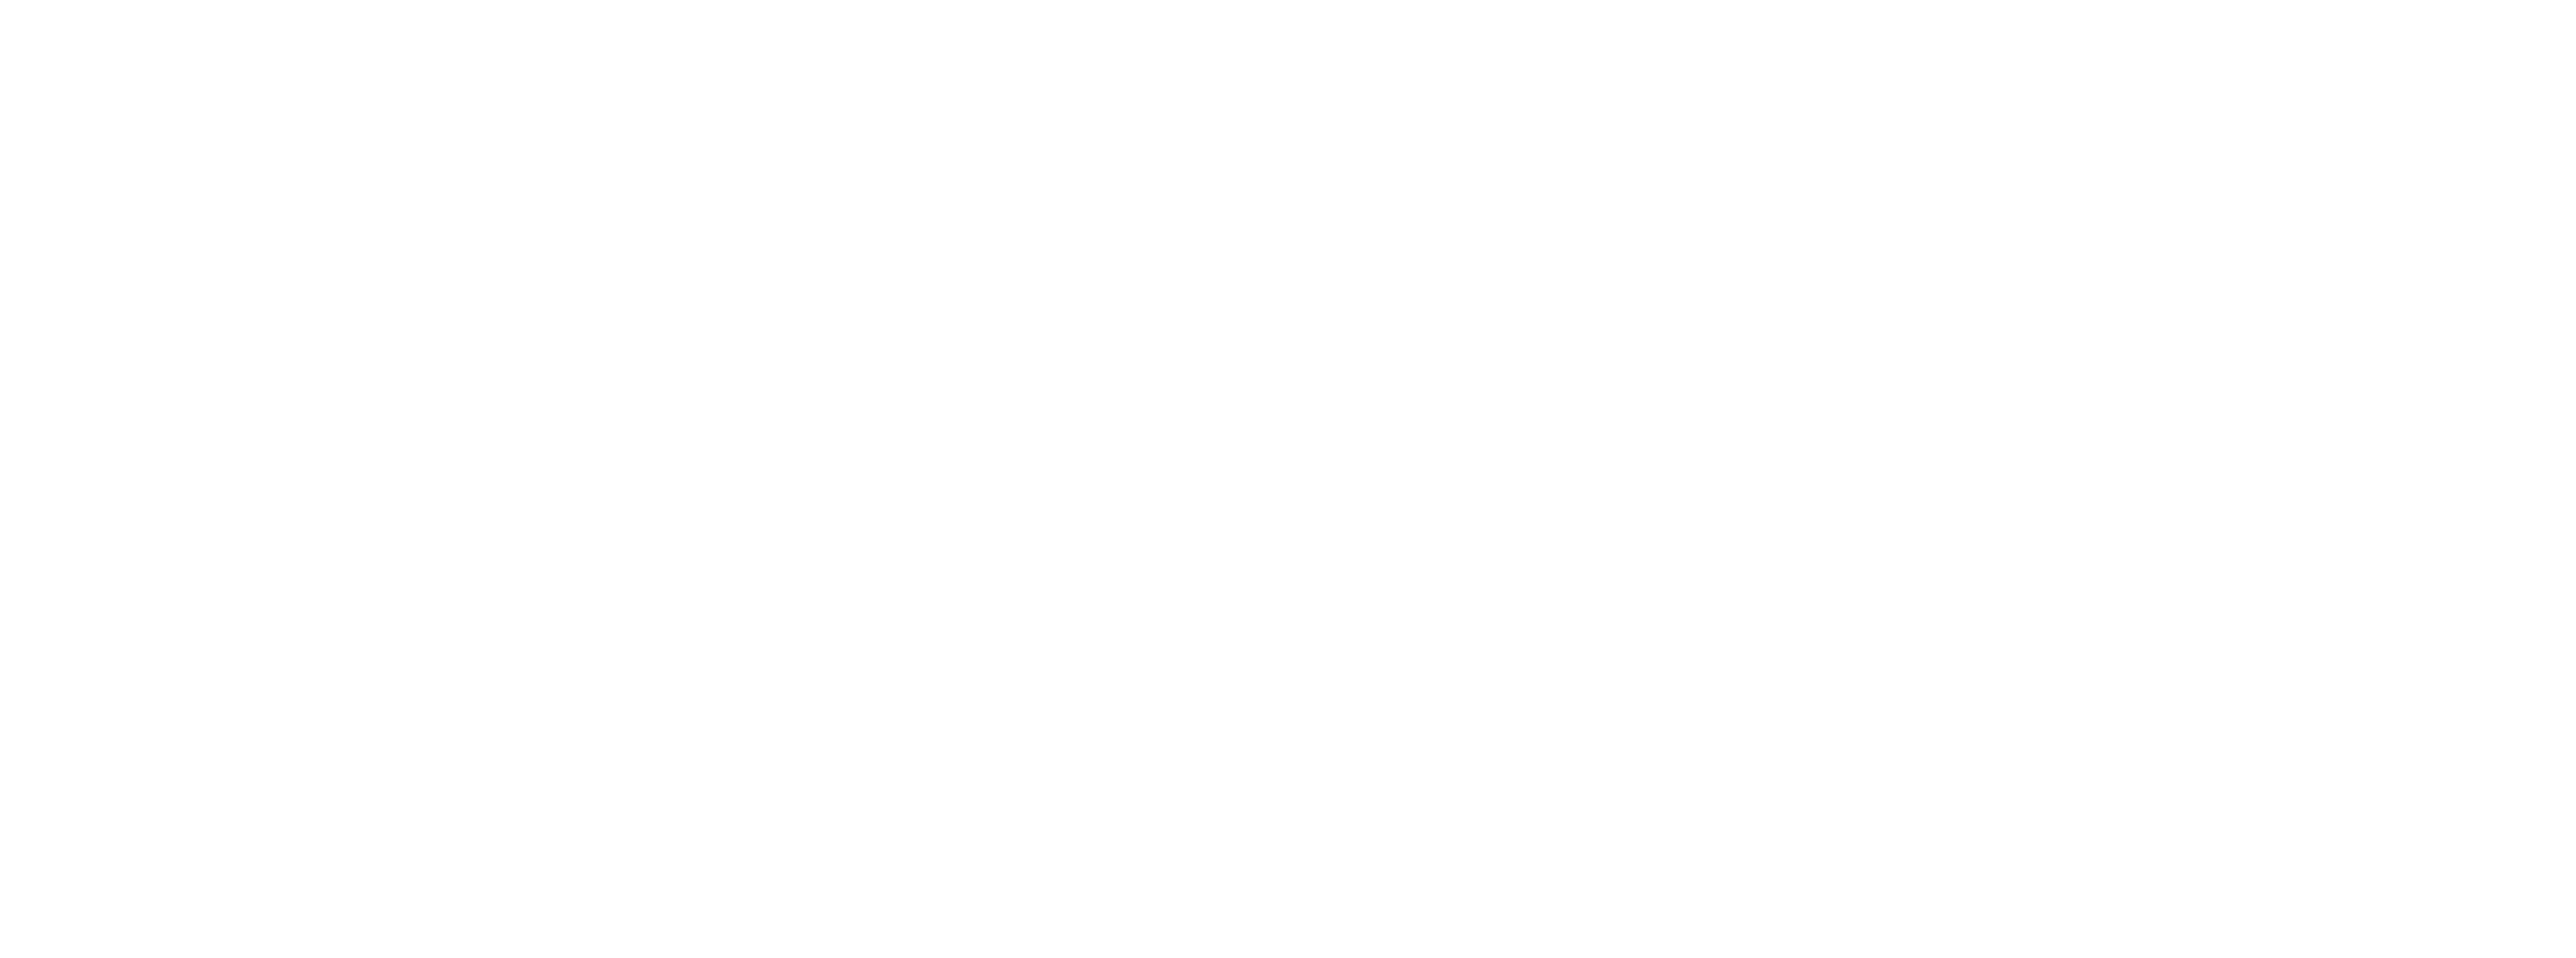 DragonFly Wellness Centre